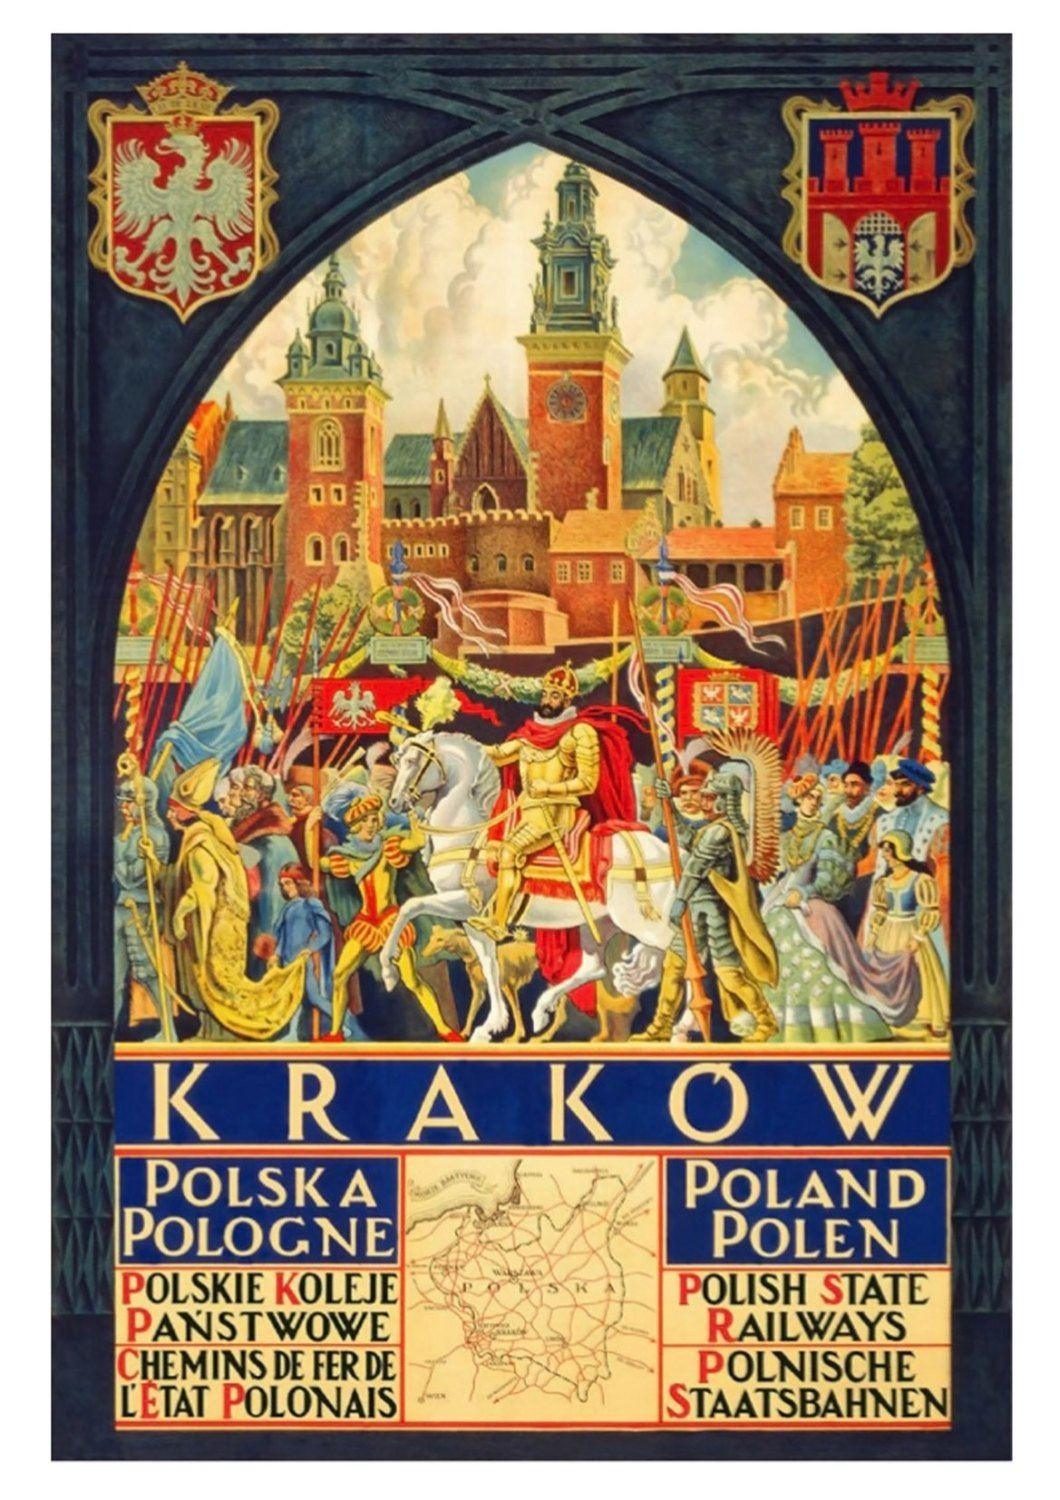 KRAKOW POLAND POSTER: Vintage Travel Advert Print - Pimlico Prints